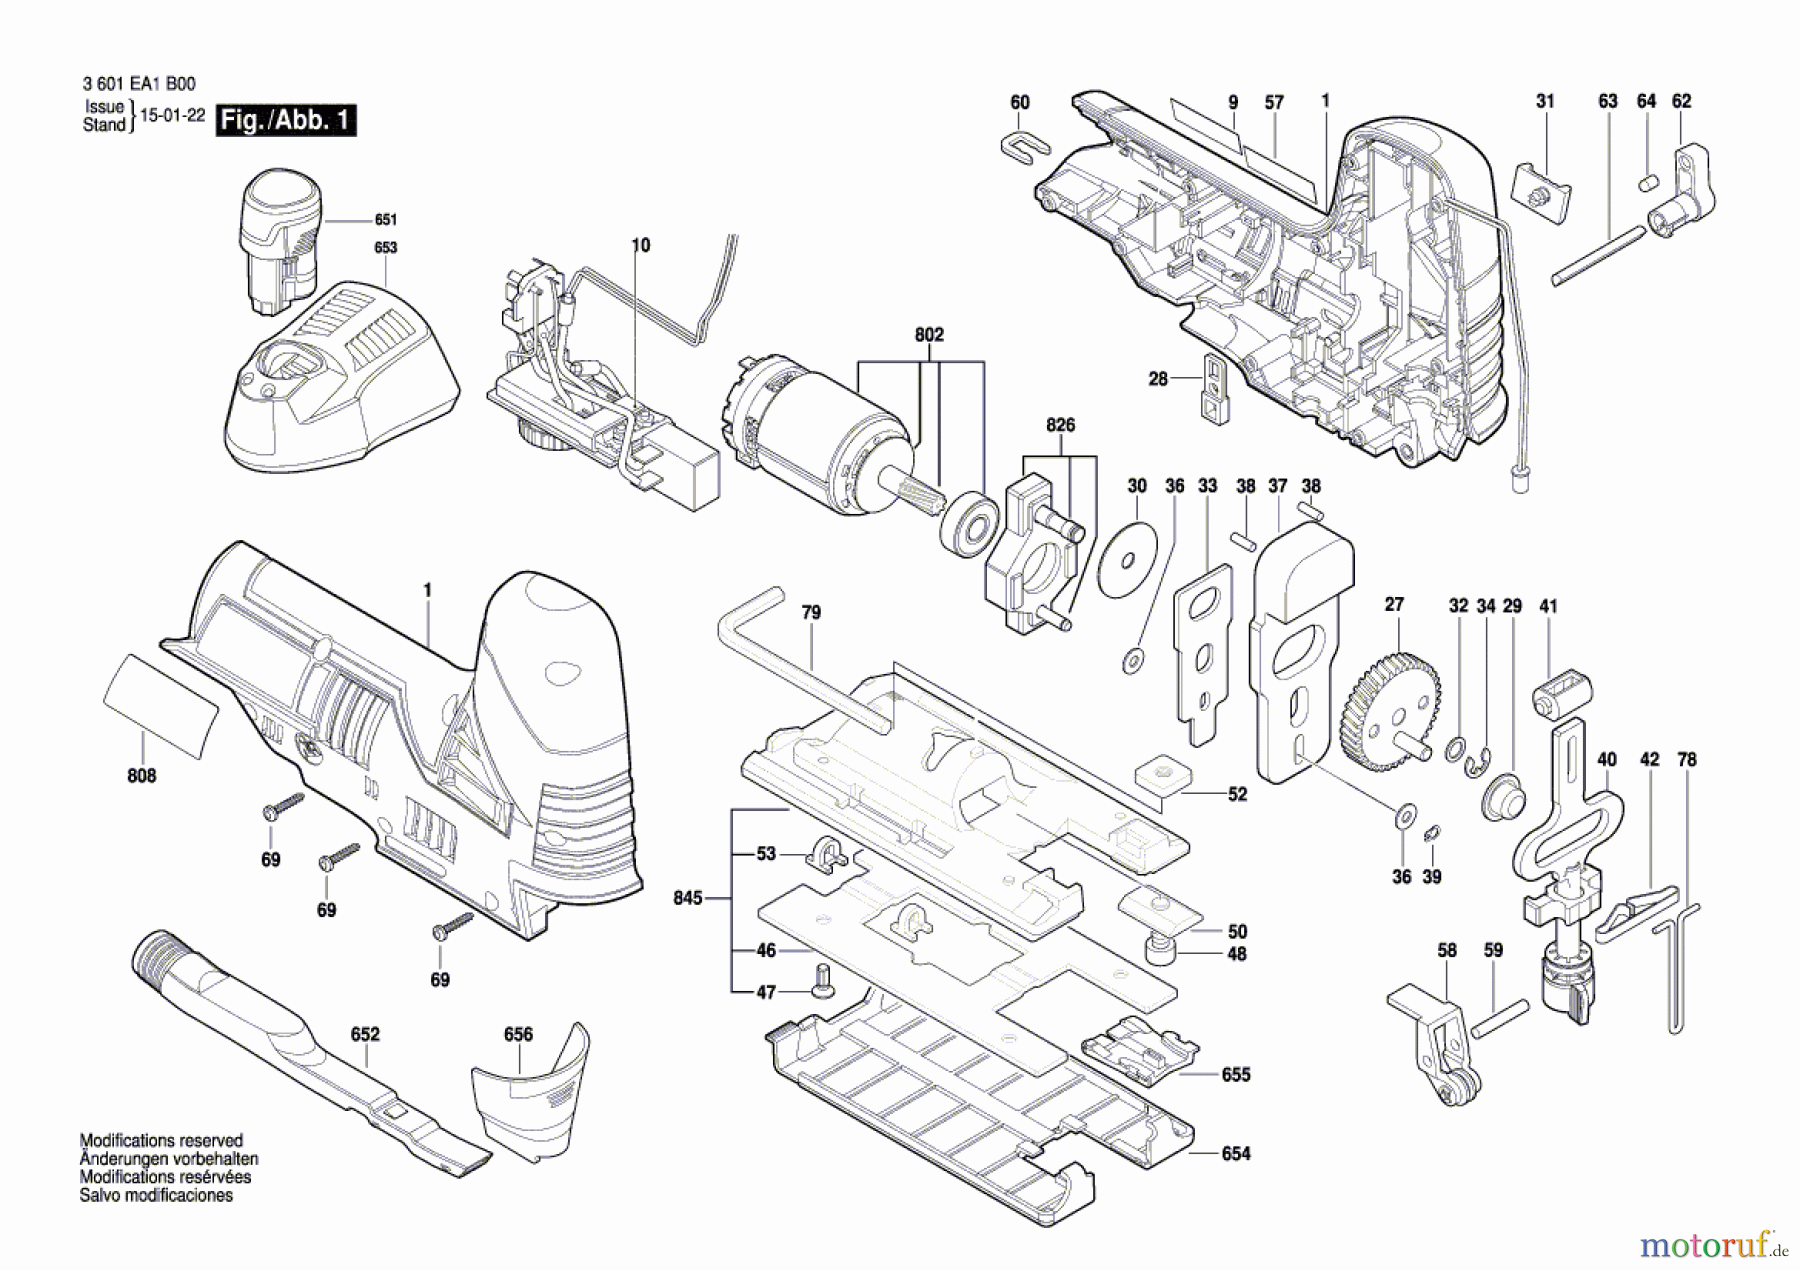  Bosch Akku Werkzeug Akku-Stichsäge BACJS 10,8 V LI Seite 1